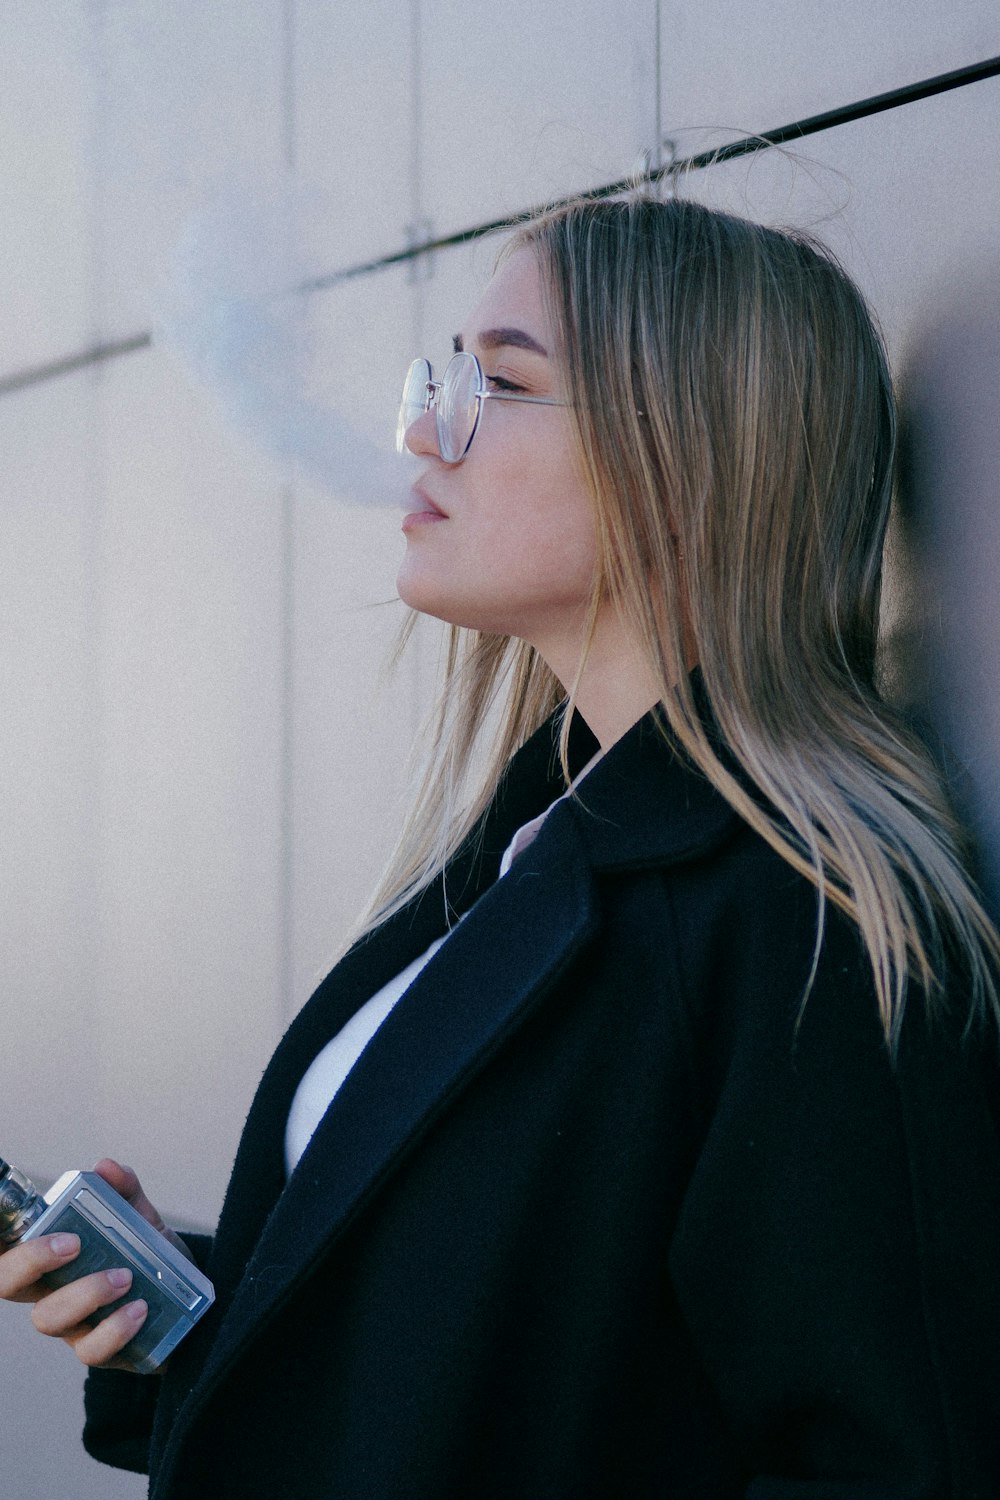 a woman smoking a cigarette next to a wall